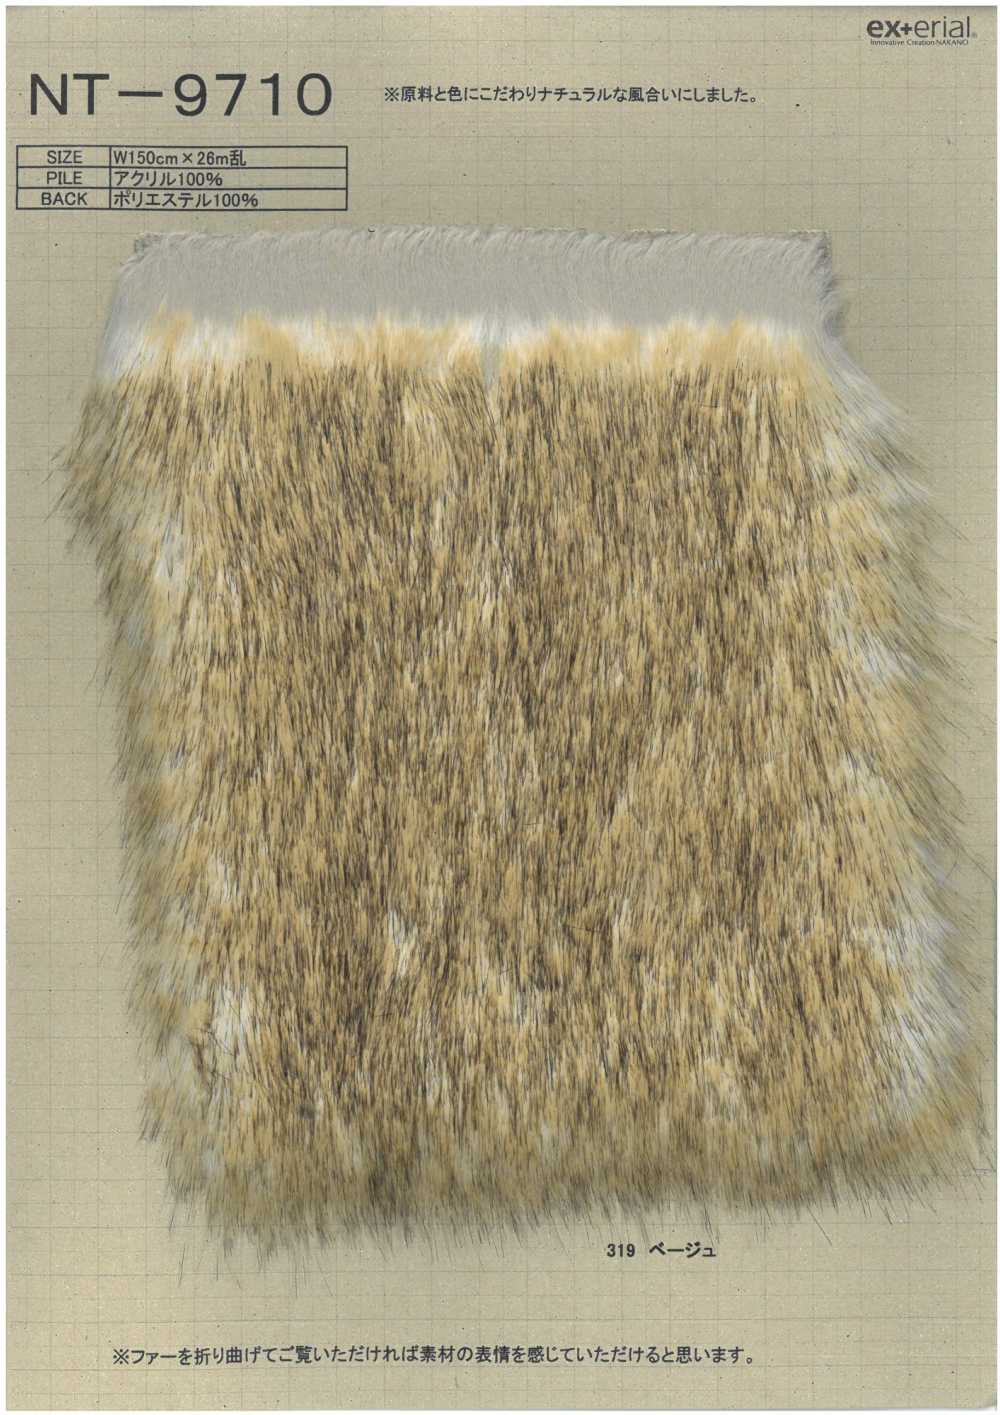 NT-9710 Fourrure Artisanale [Fuzzy Lop][Fabrication De Textile] Industrie Du Jersey Nakano